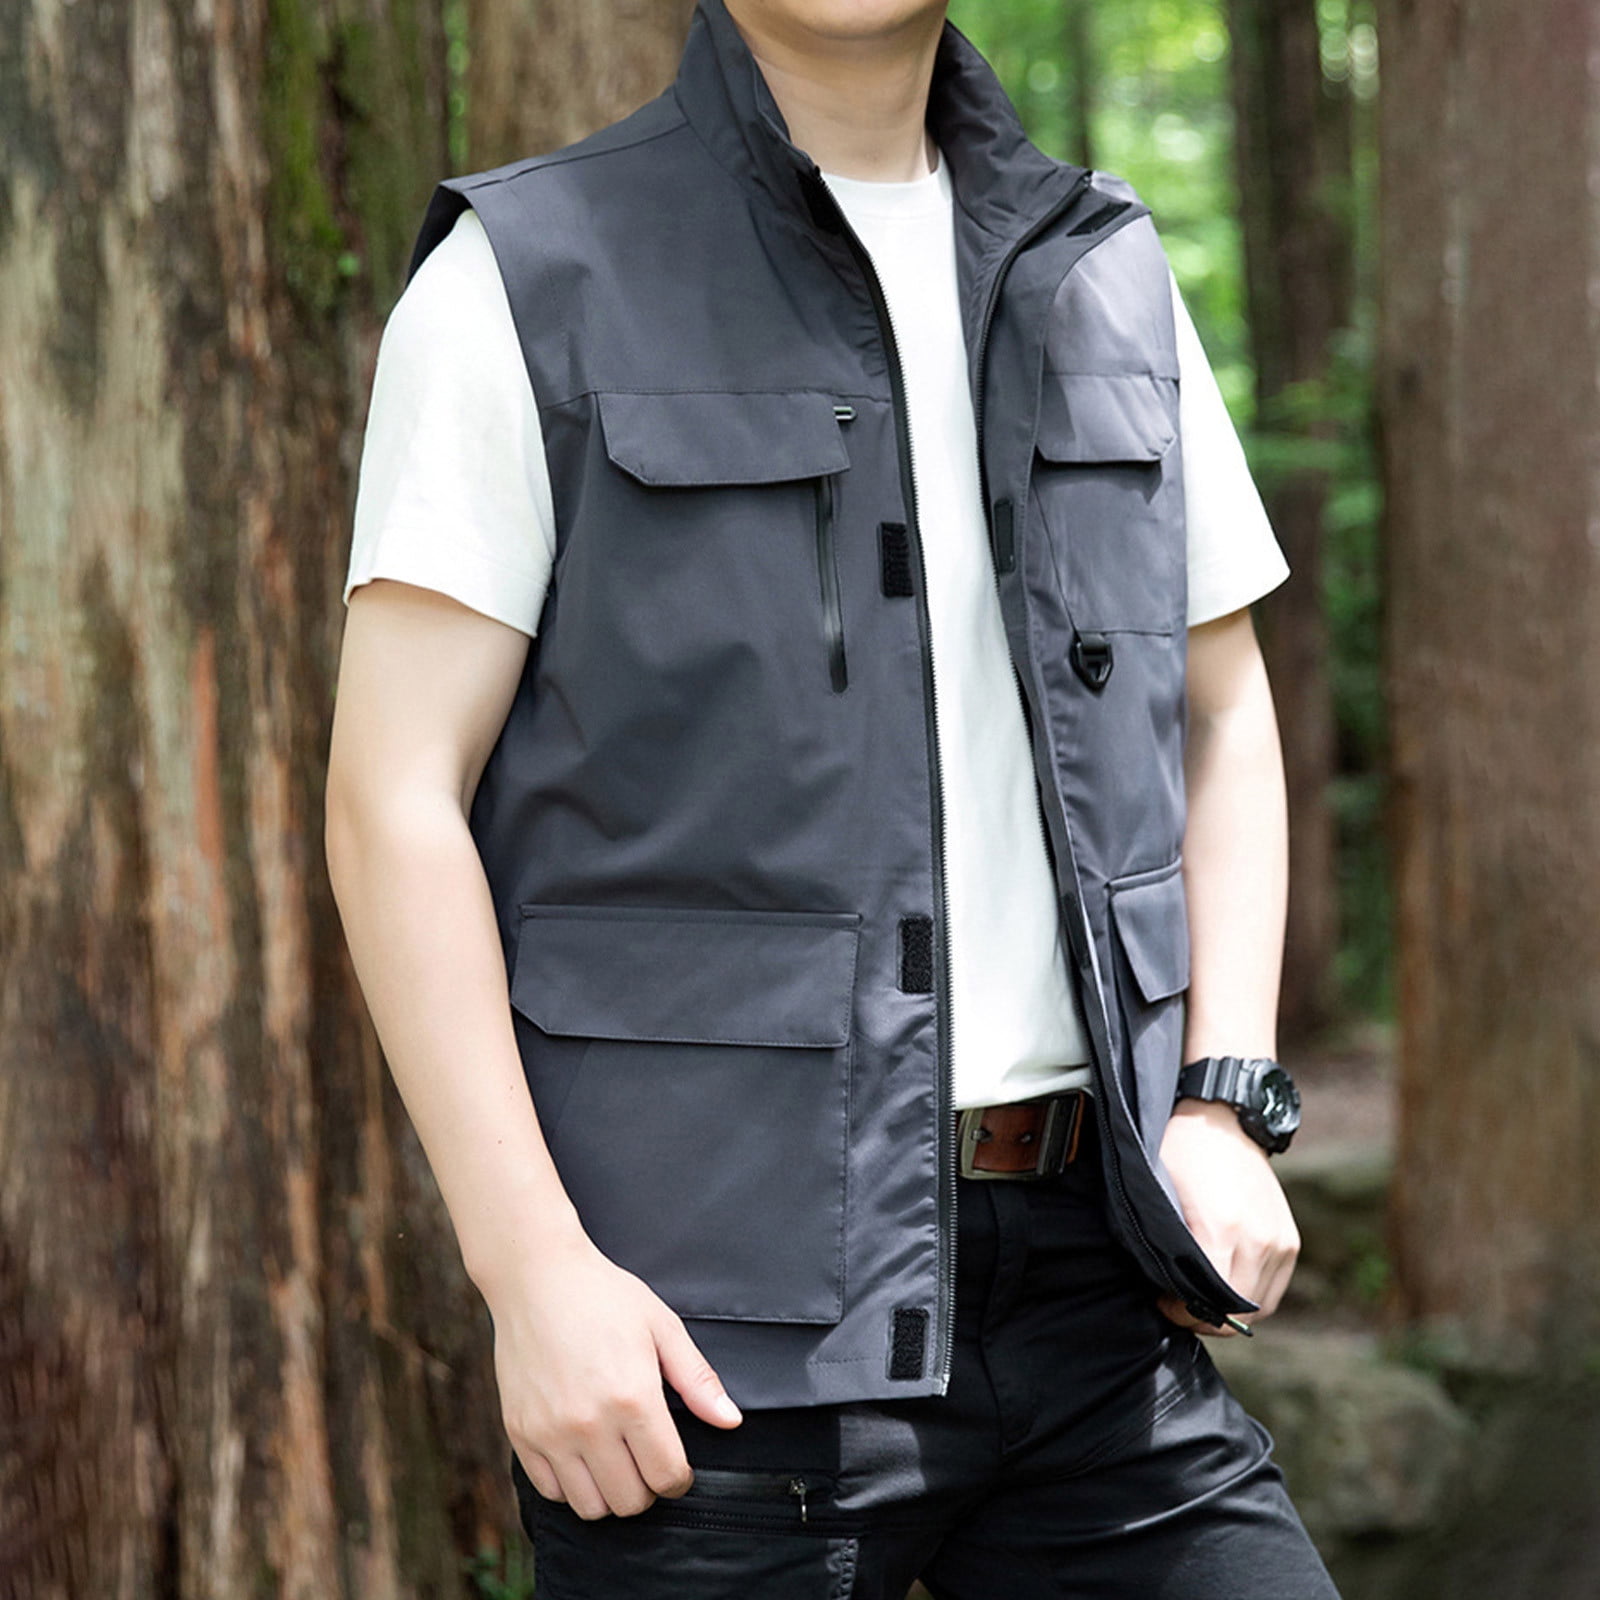 Wyongtao Black and Friday Deals Men's Fishing Vest Quick-drying Summer  Outdoor Lightweight Work Photo Vest with Pockets Dark Gray XXXXL